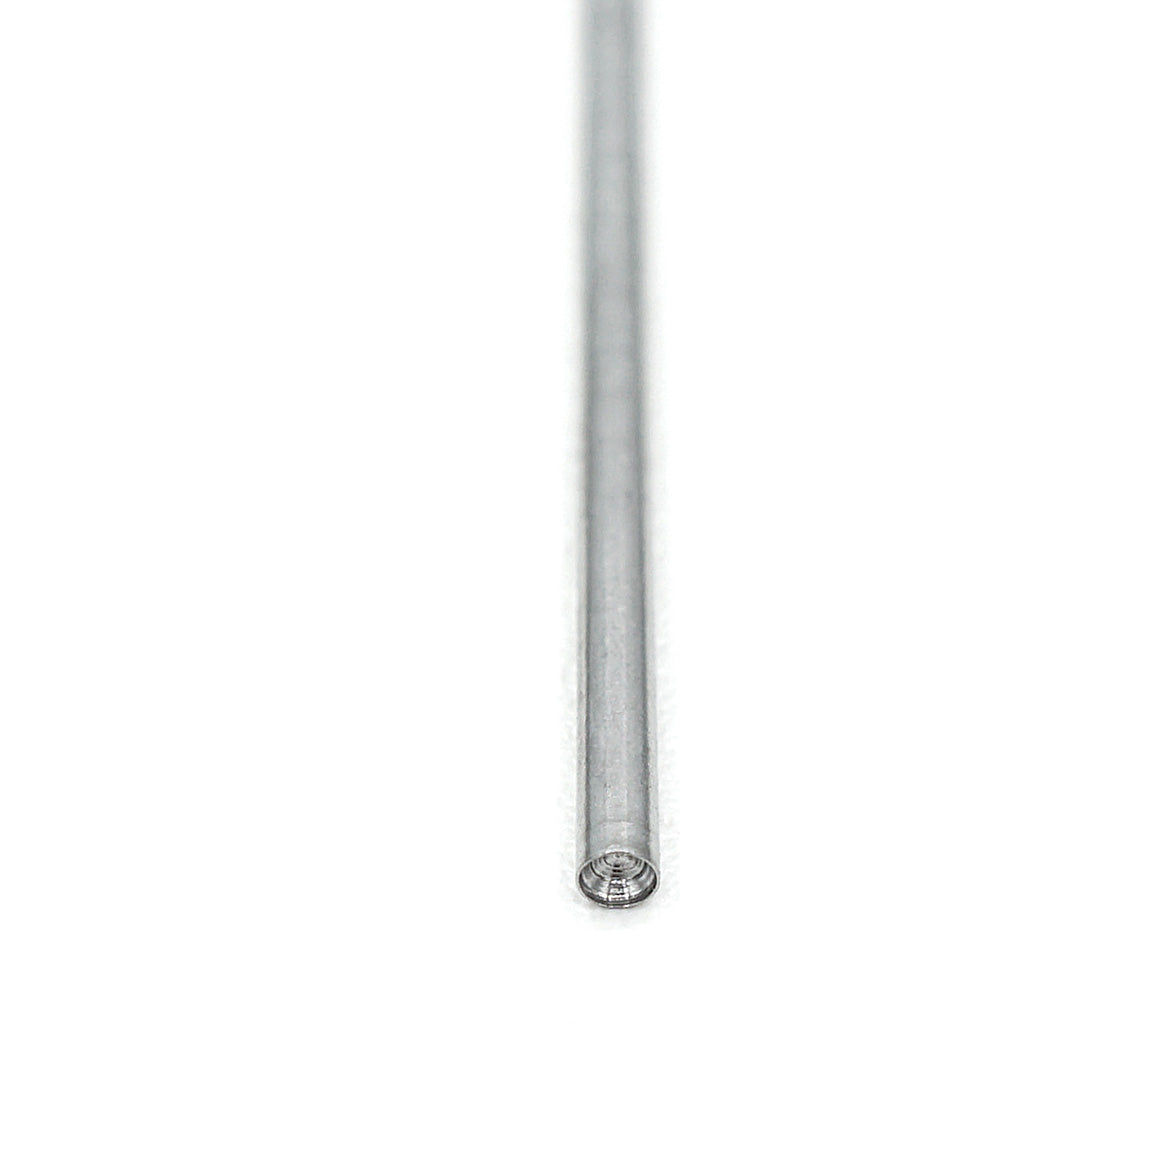  Xpircn Piercing Taper Insertion Pins 12G Piercing